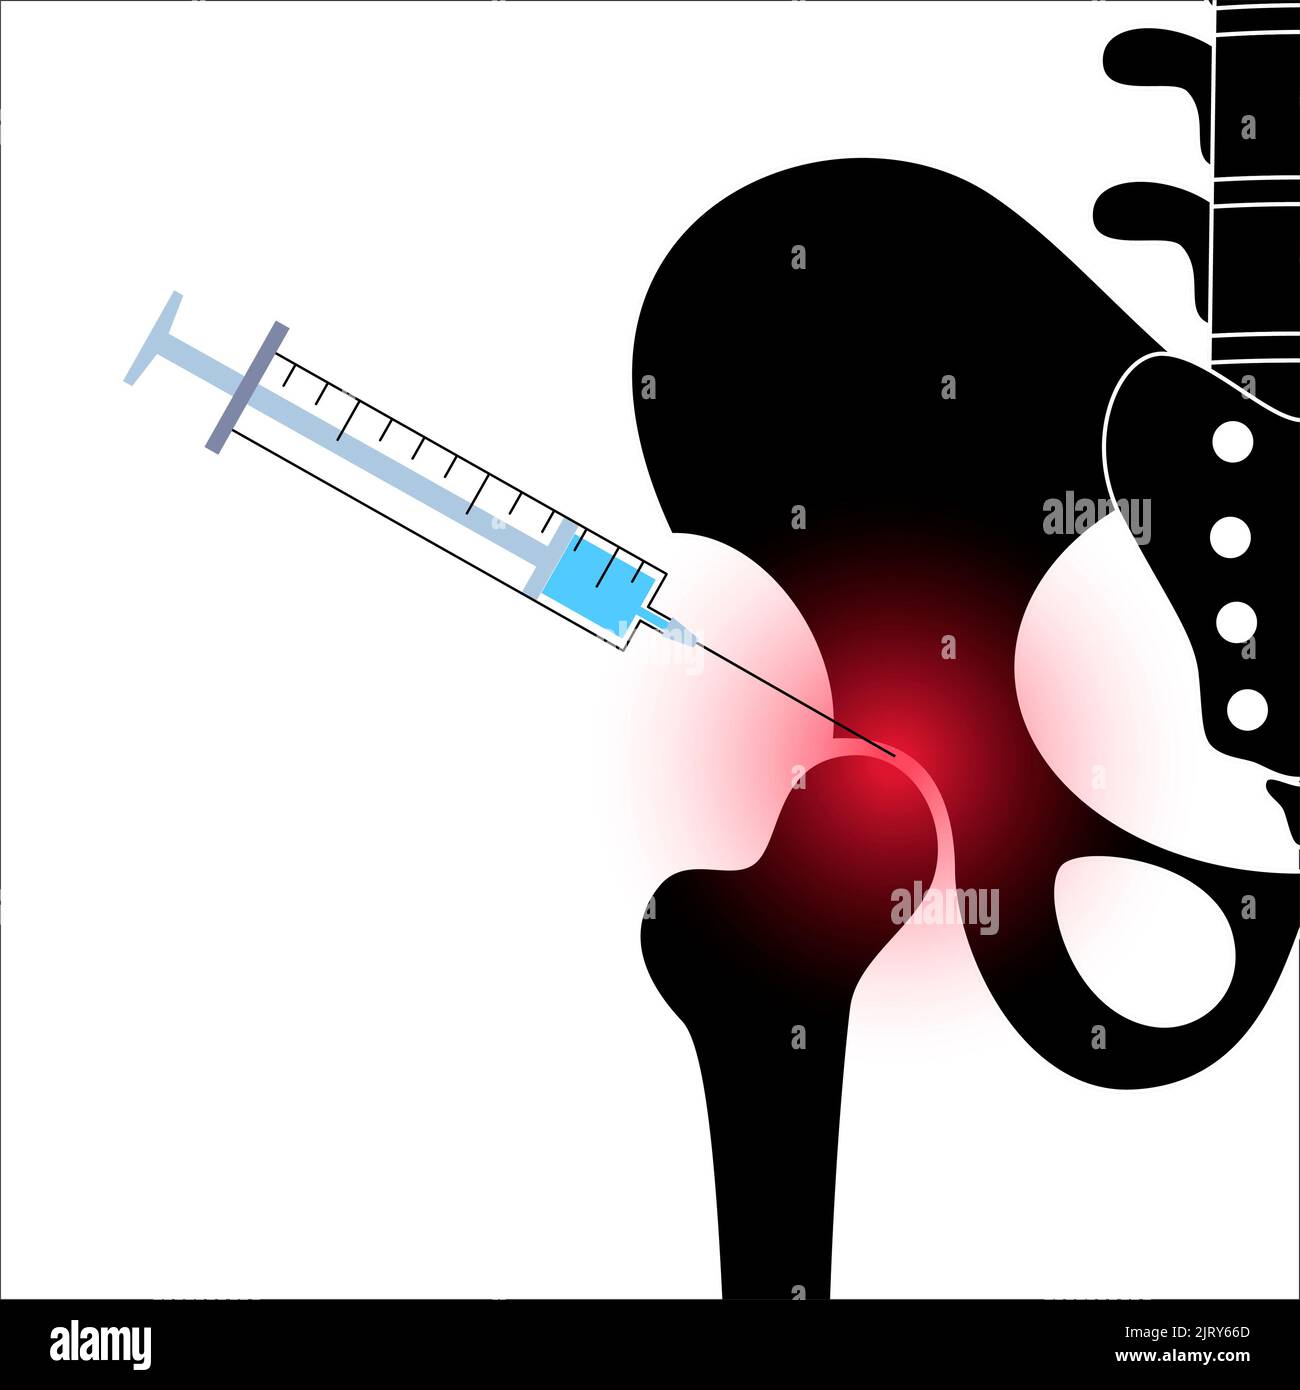 https://c8.alamy.com/comp/2JRY66D/hip-joint-injection-illustration-2JRY66D.jpg